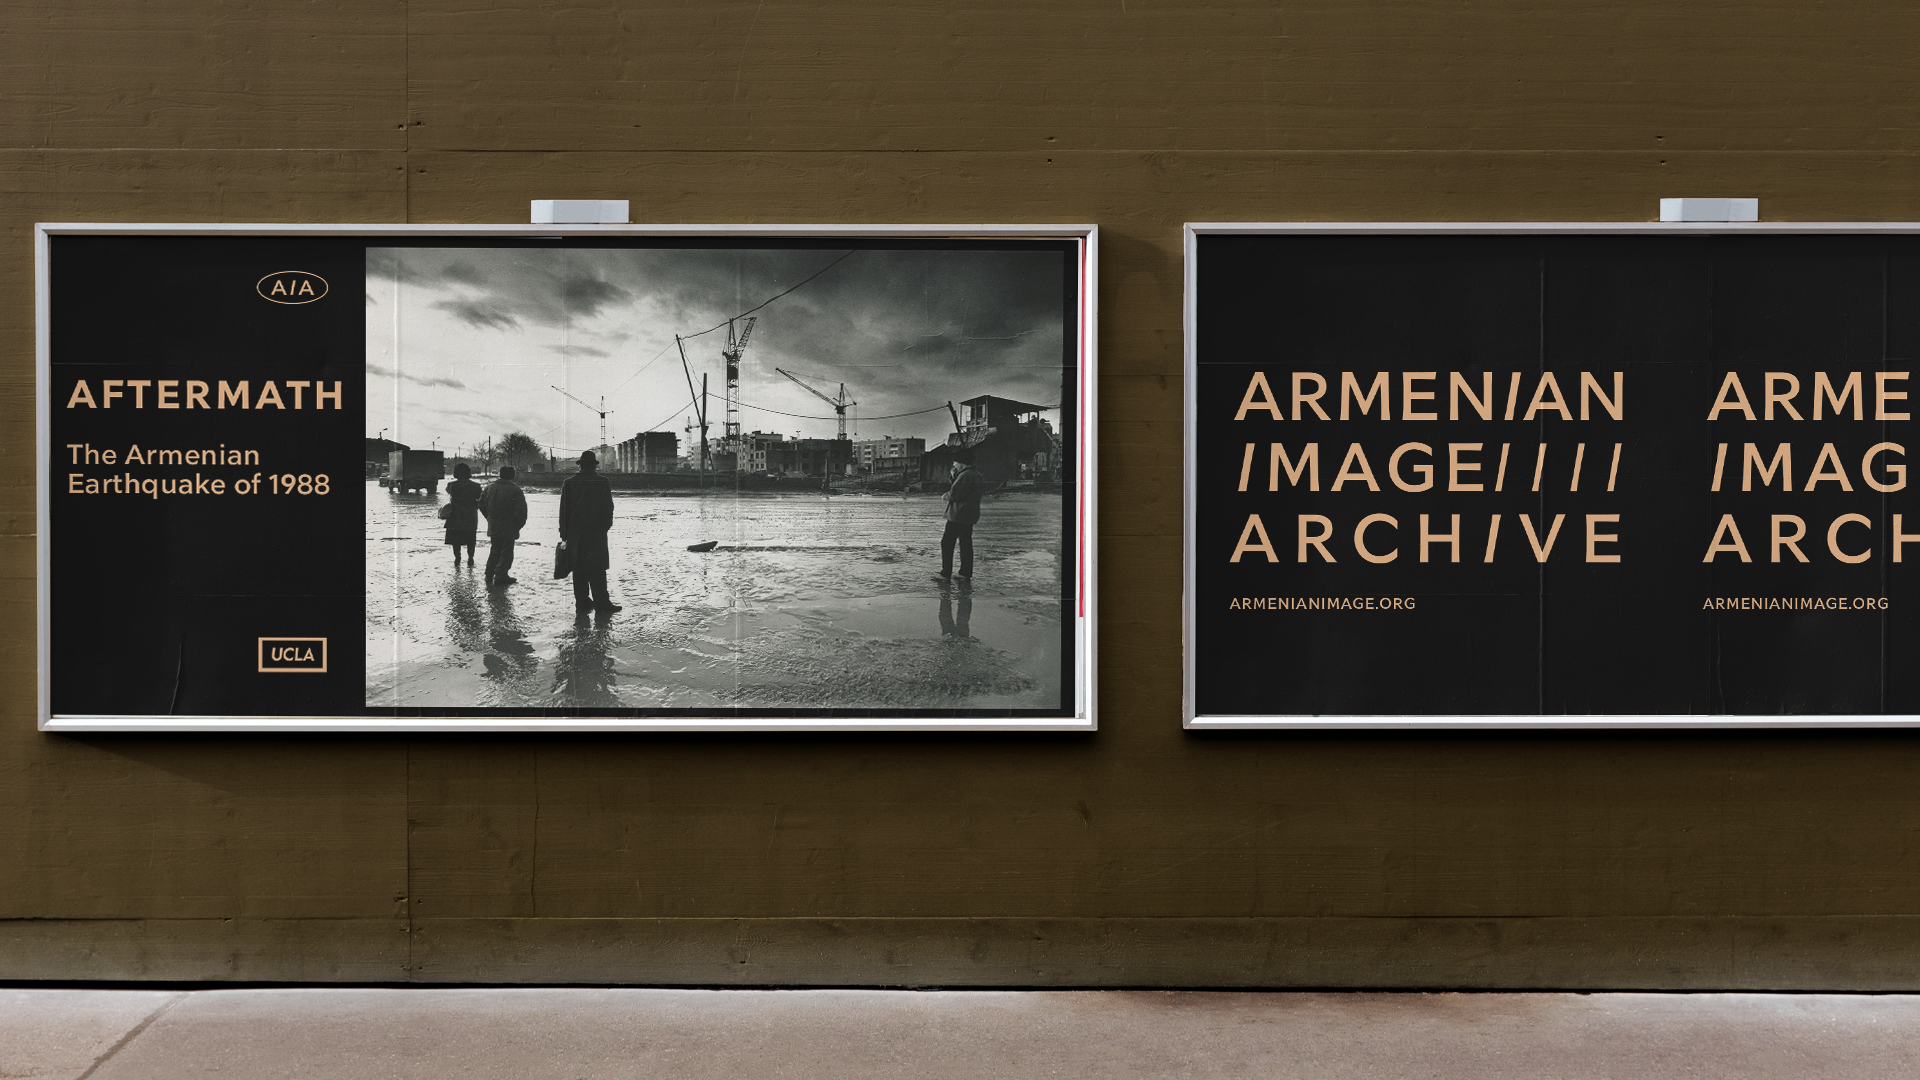 Identity & Website: Armenian Image Archive